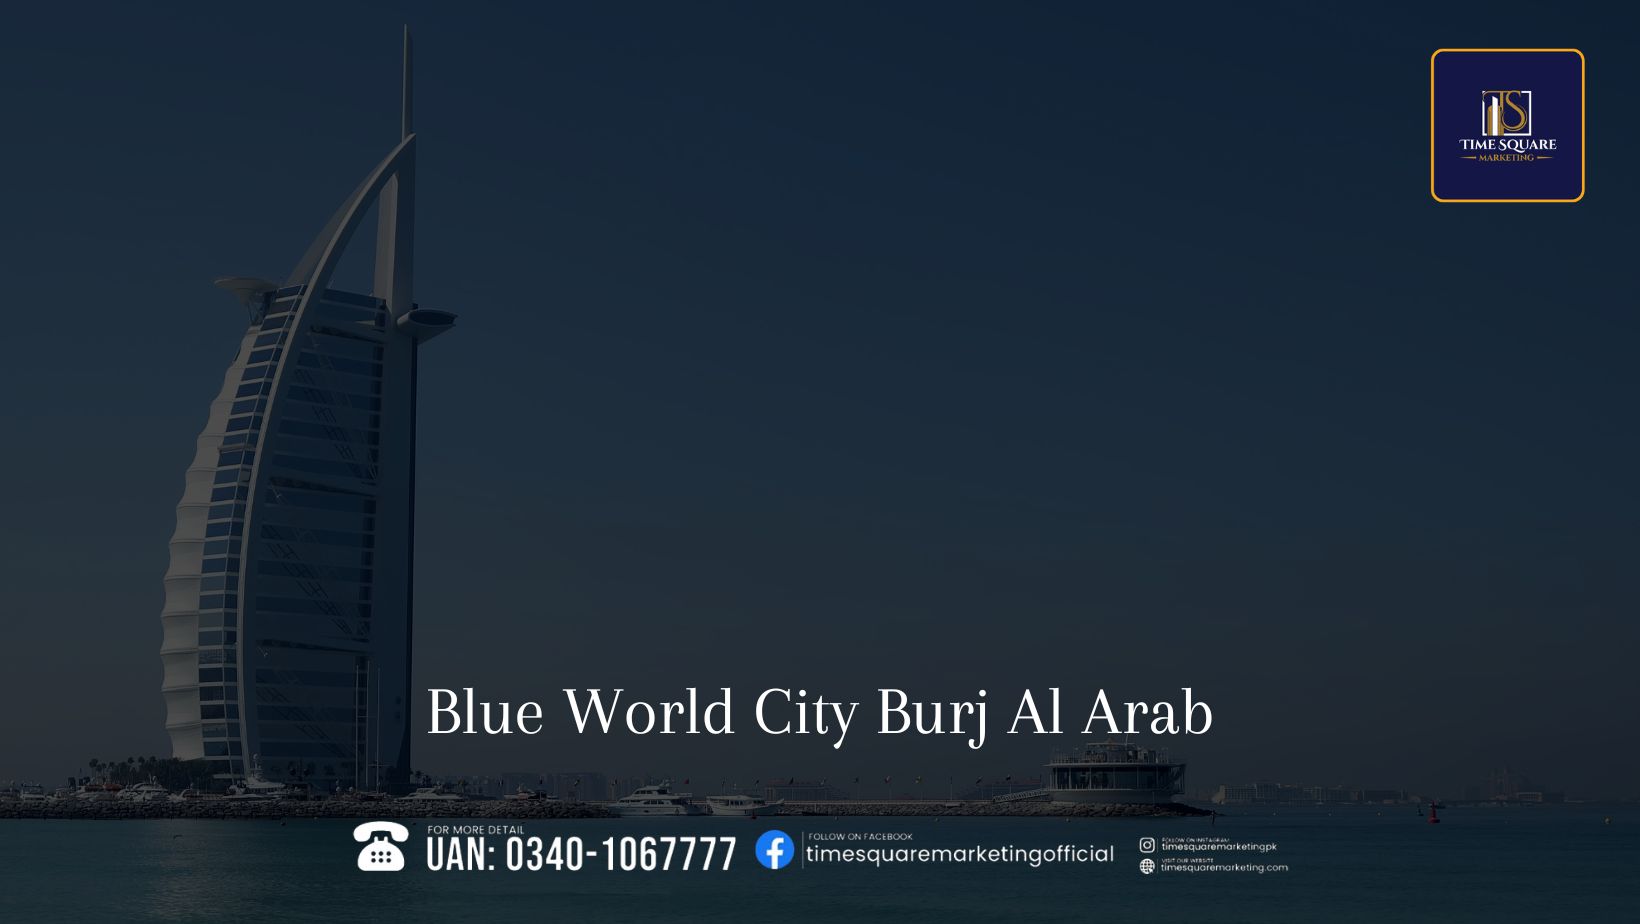 Burj Al Arab Blue World City